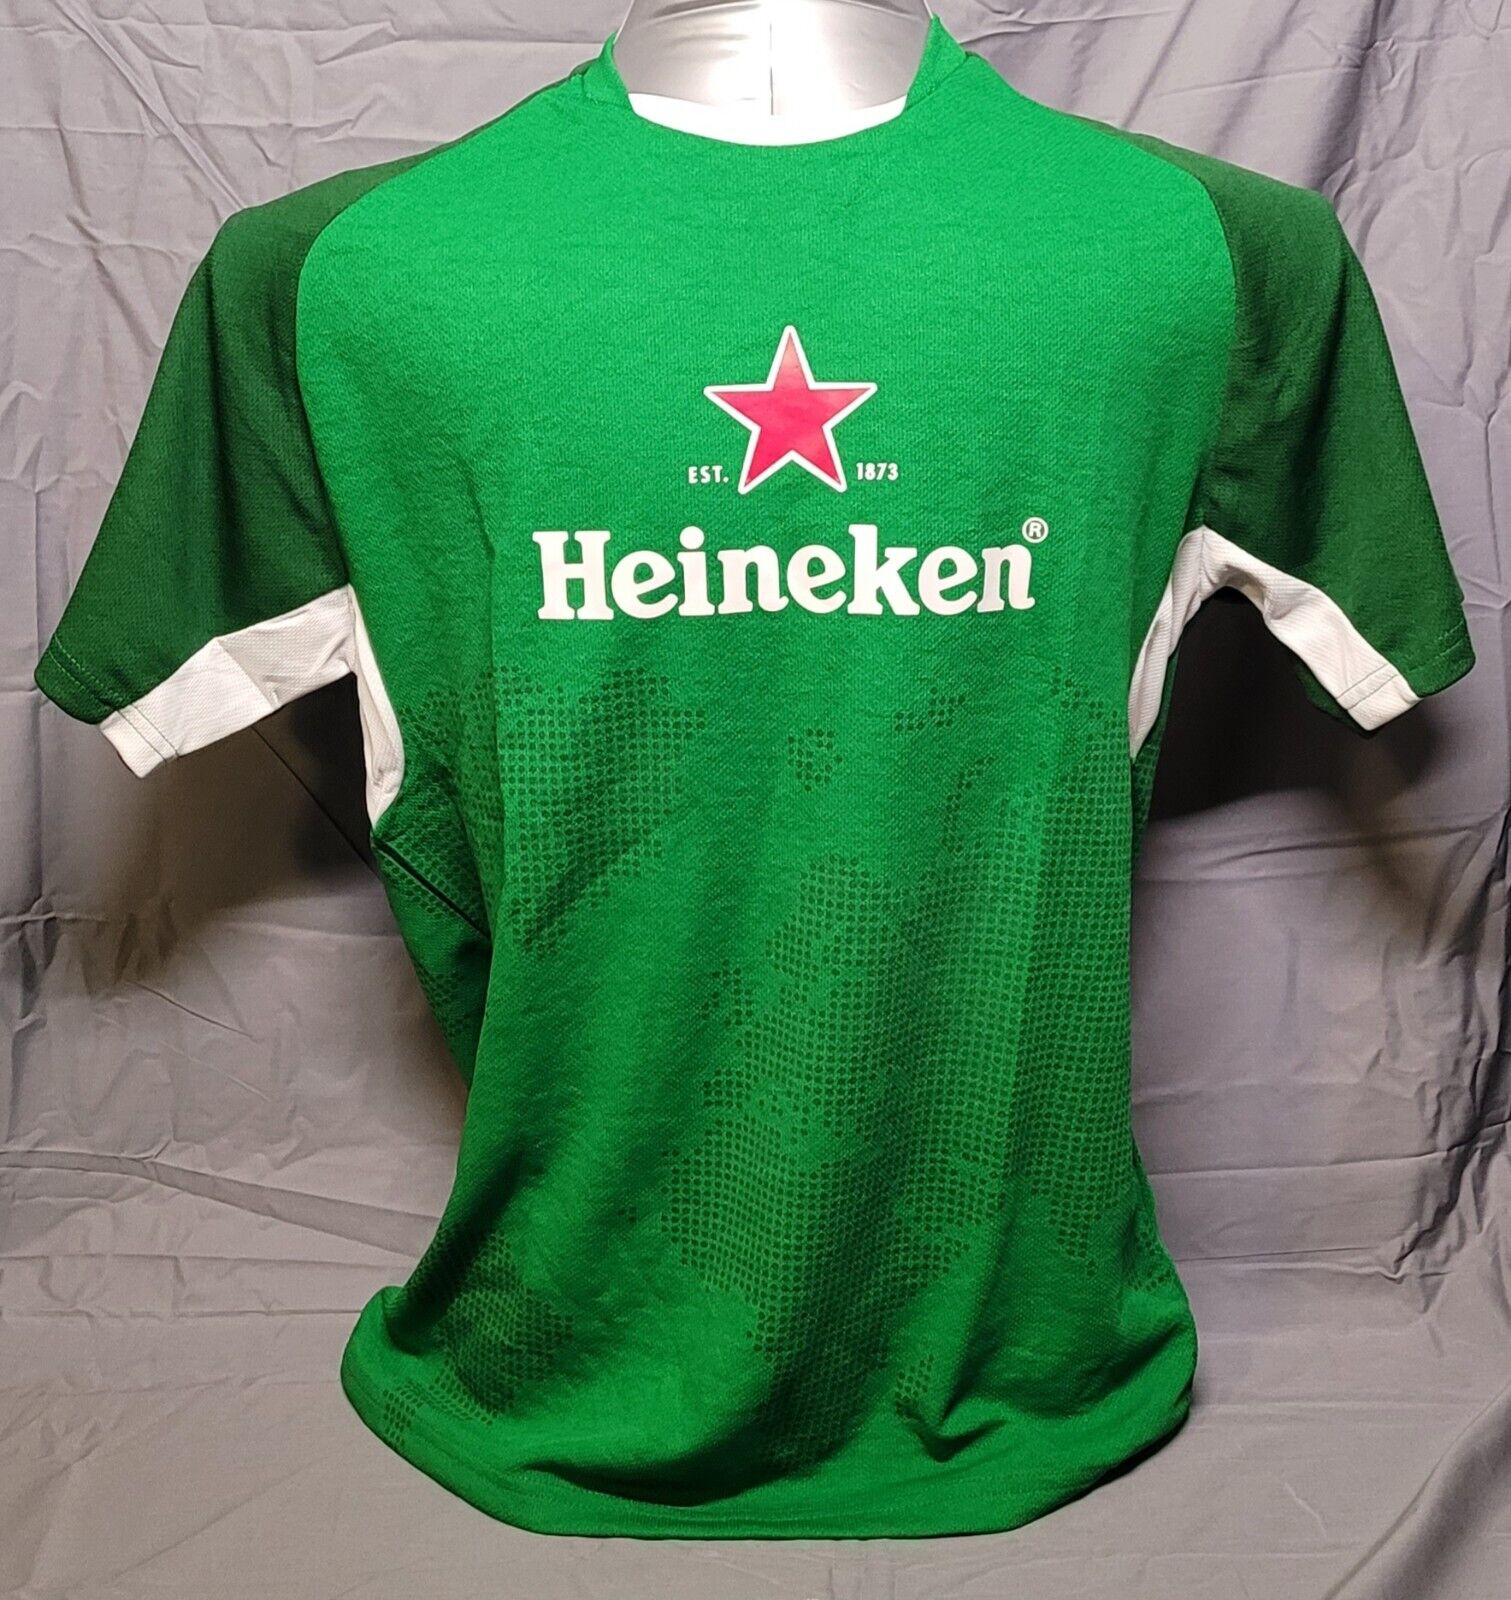 Heineken Beer Green Pullover Shirt Short Sleeve #18 Soccer Jersey - Adult Large 